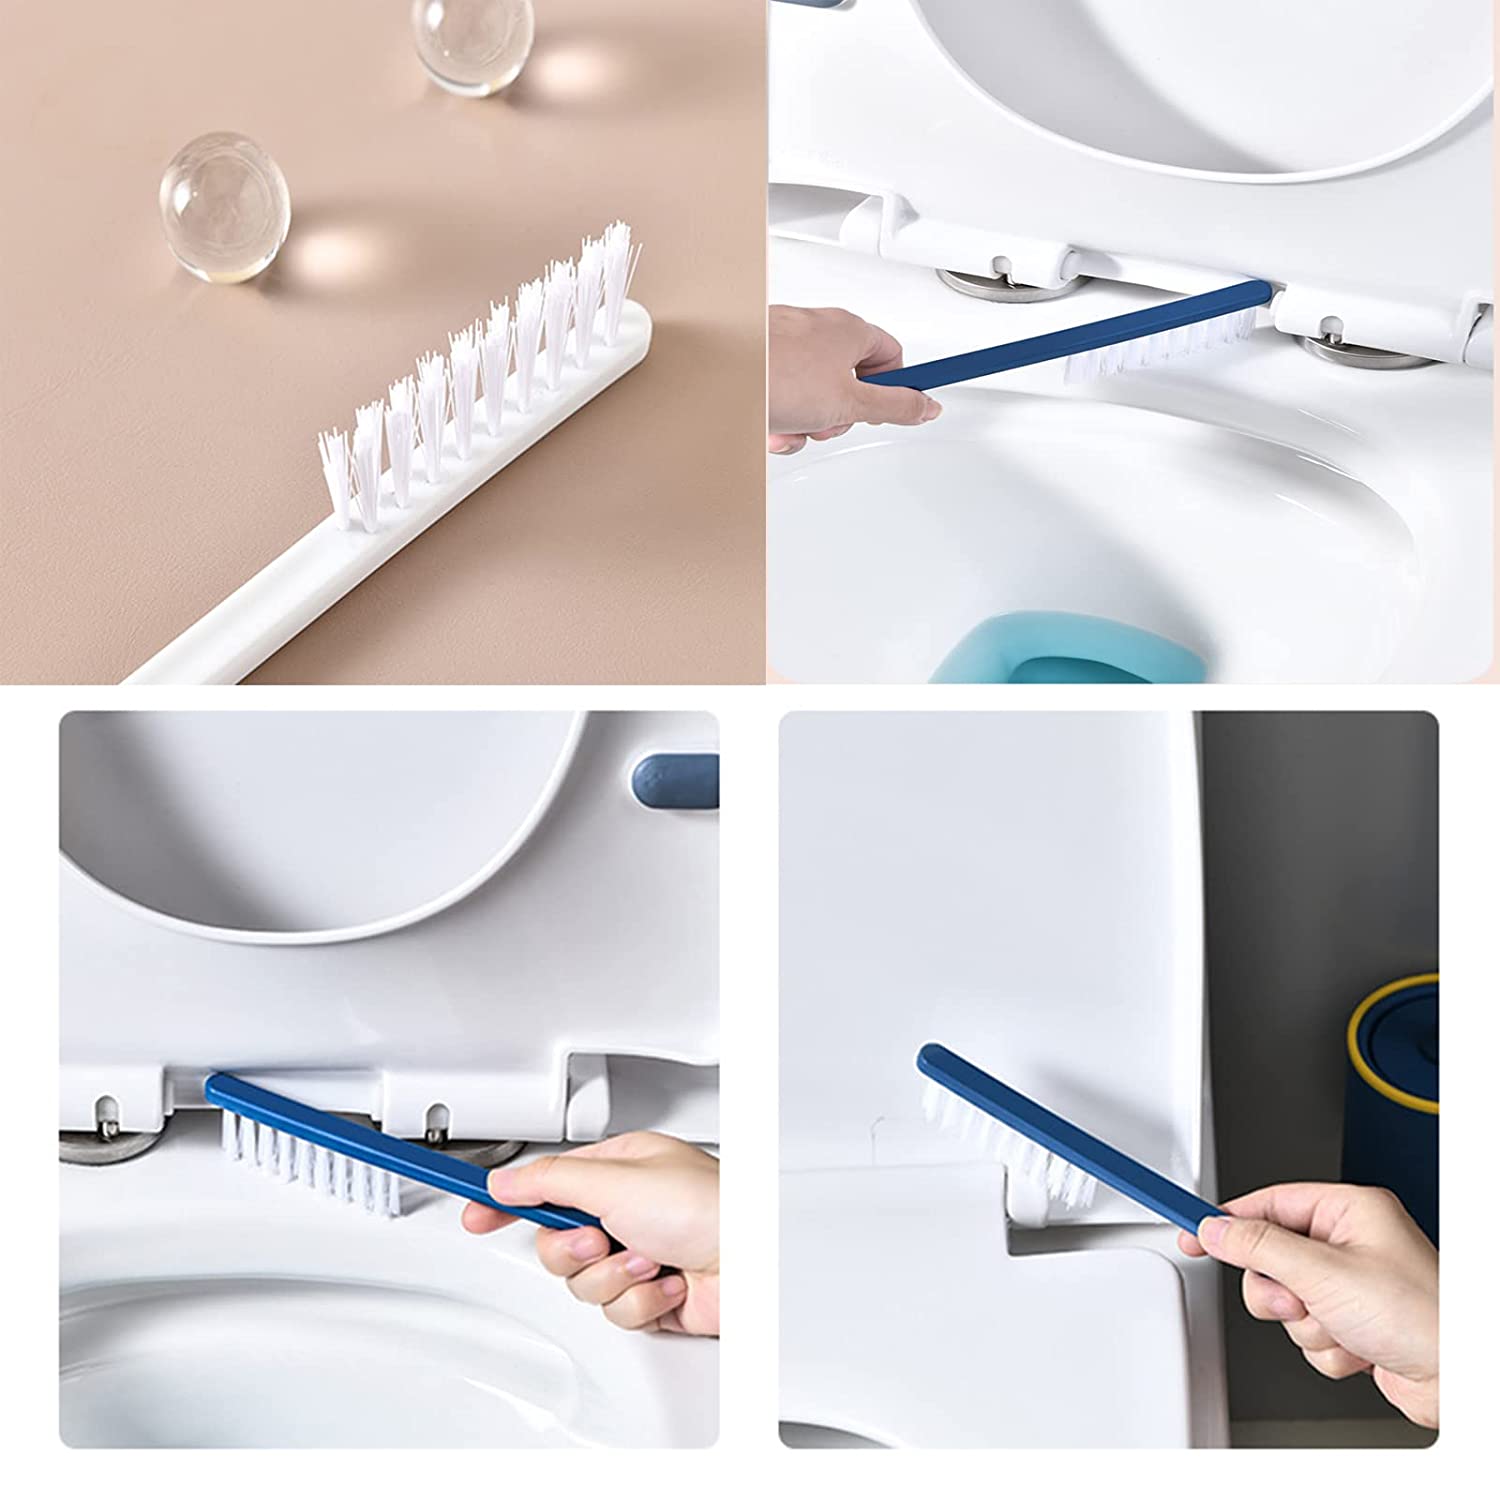 7683 Toilet Brush Set , Toilet Brush And Holder Set, Anti-Slip Handle Silicone Toilet Brush And Small Cleaning Brush , DeoDap